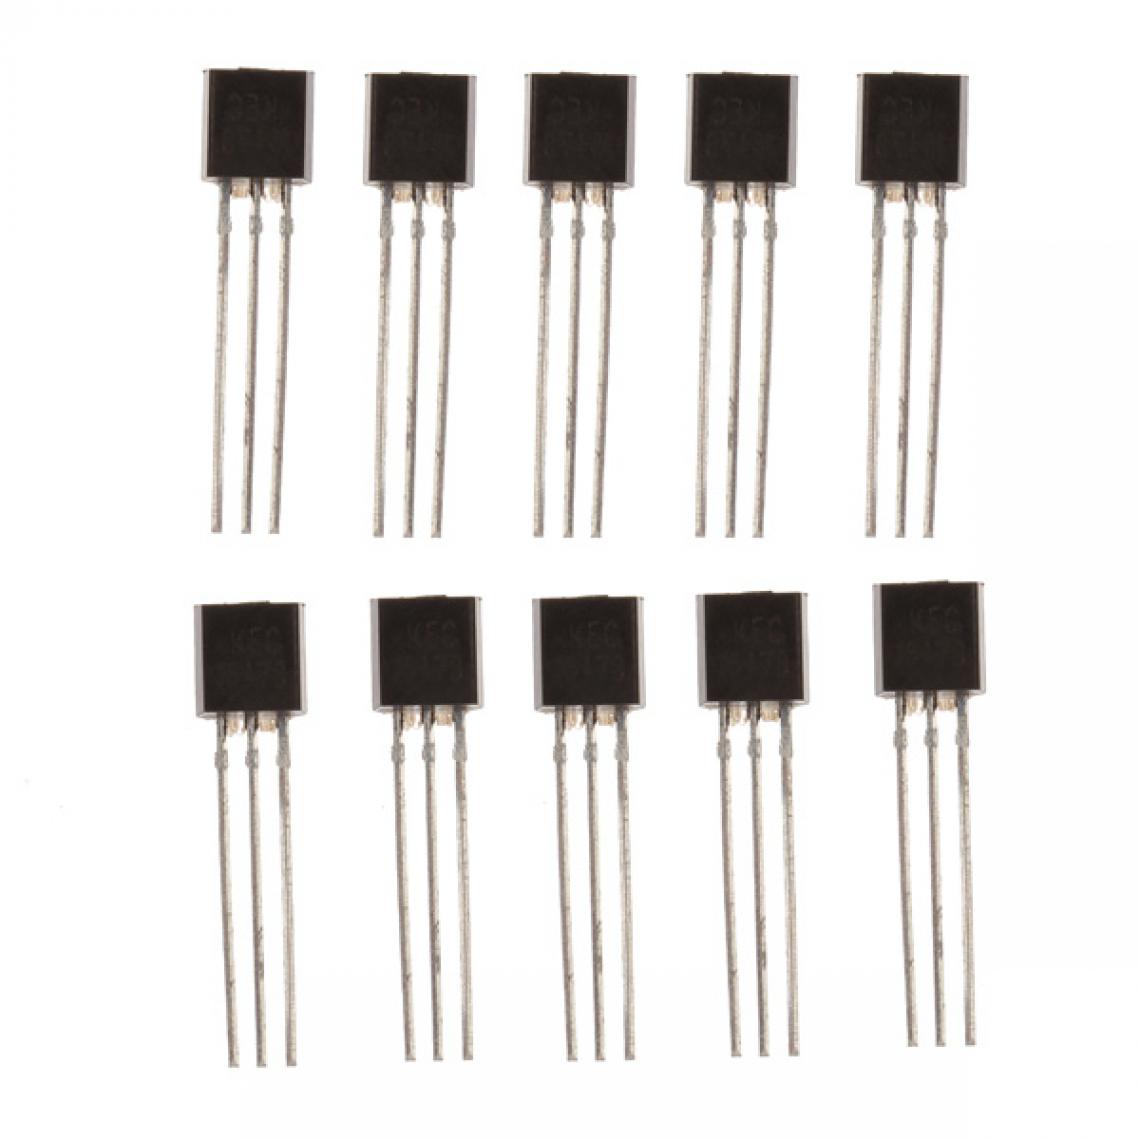 marque generique - Lot 100pcs BC547 TO-92 NPN Transistor - Appareils de mesure